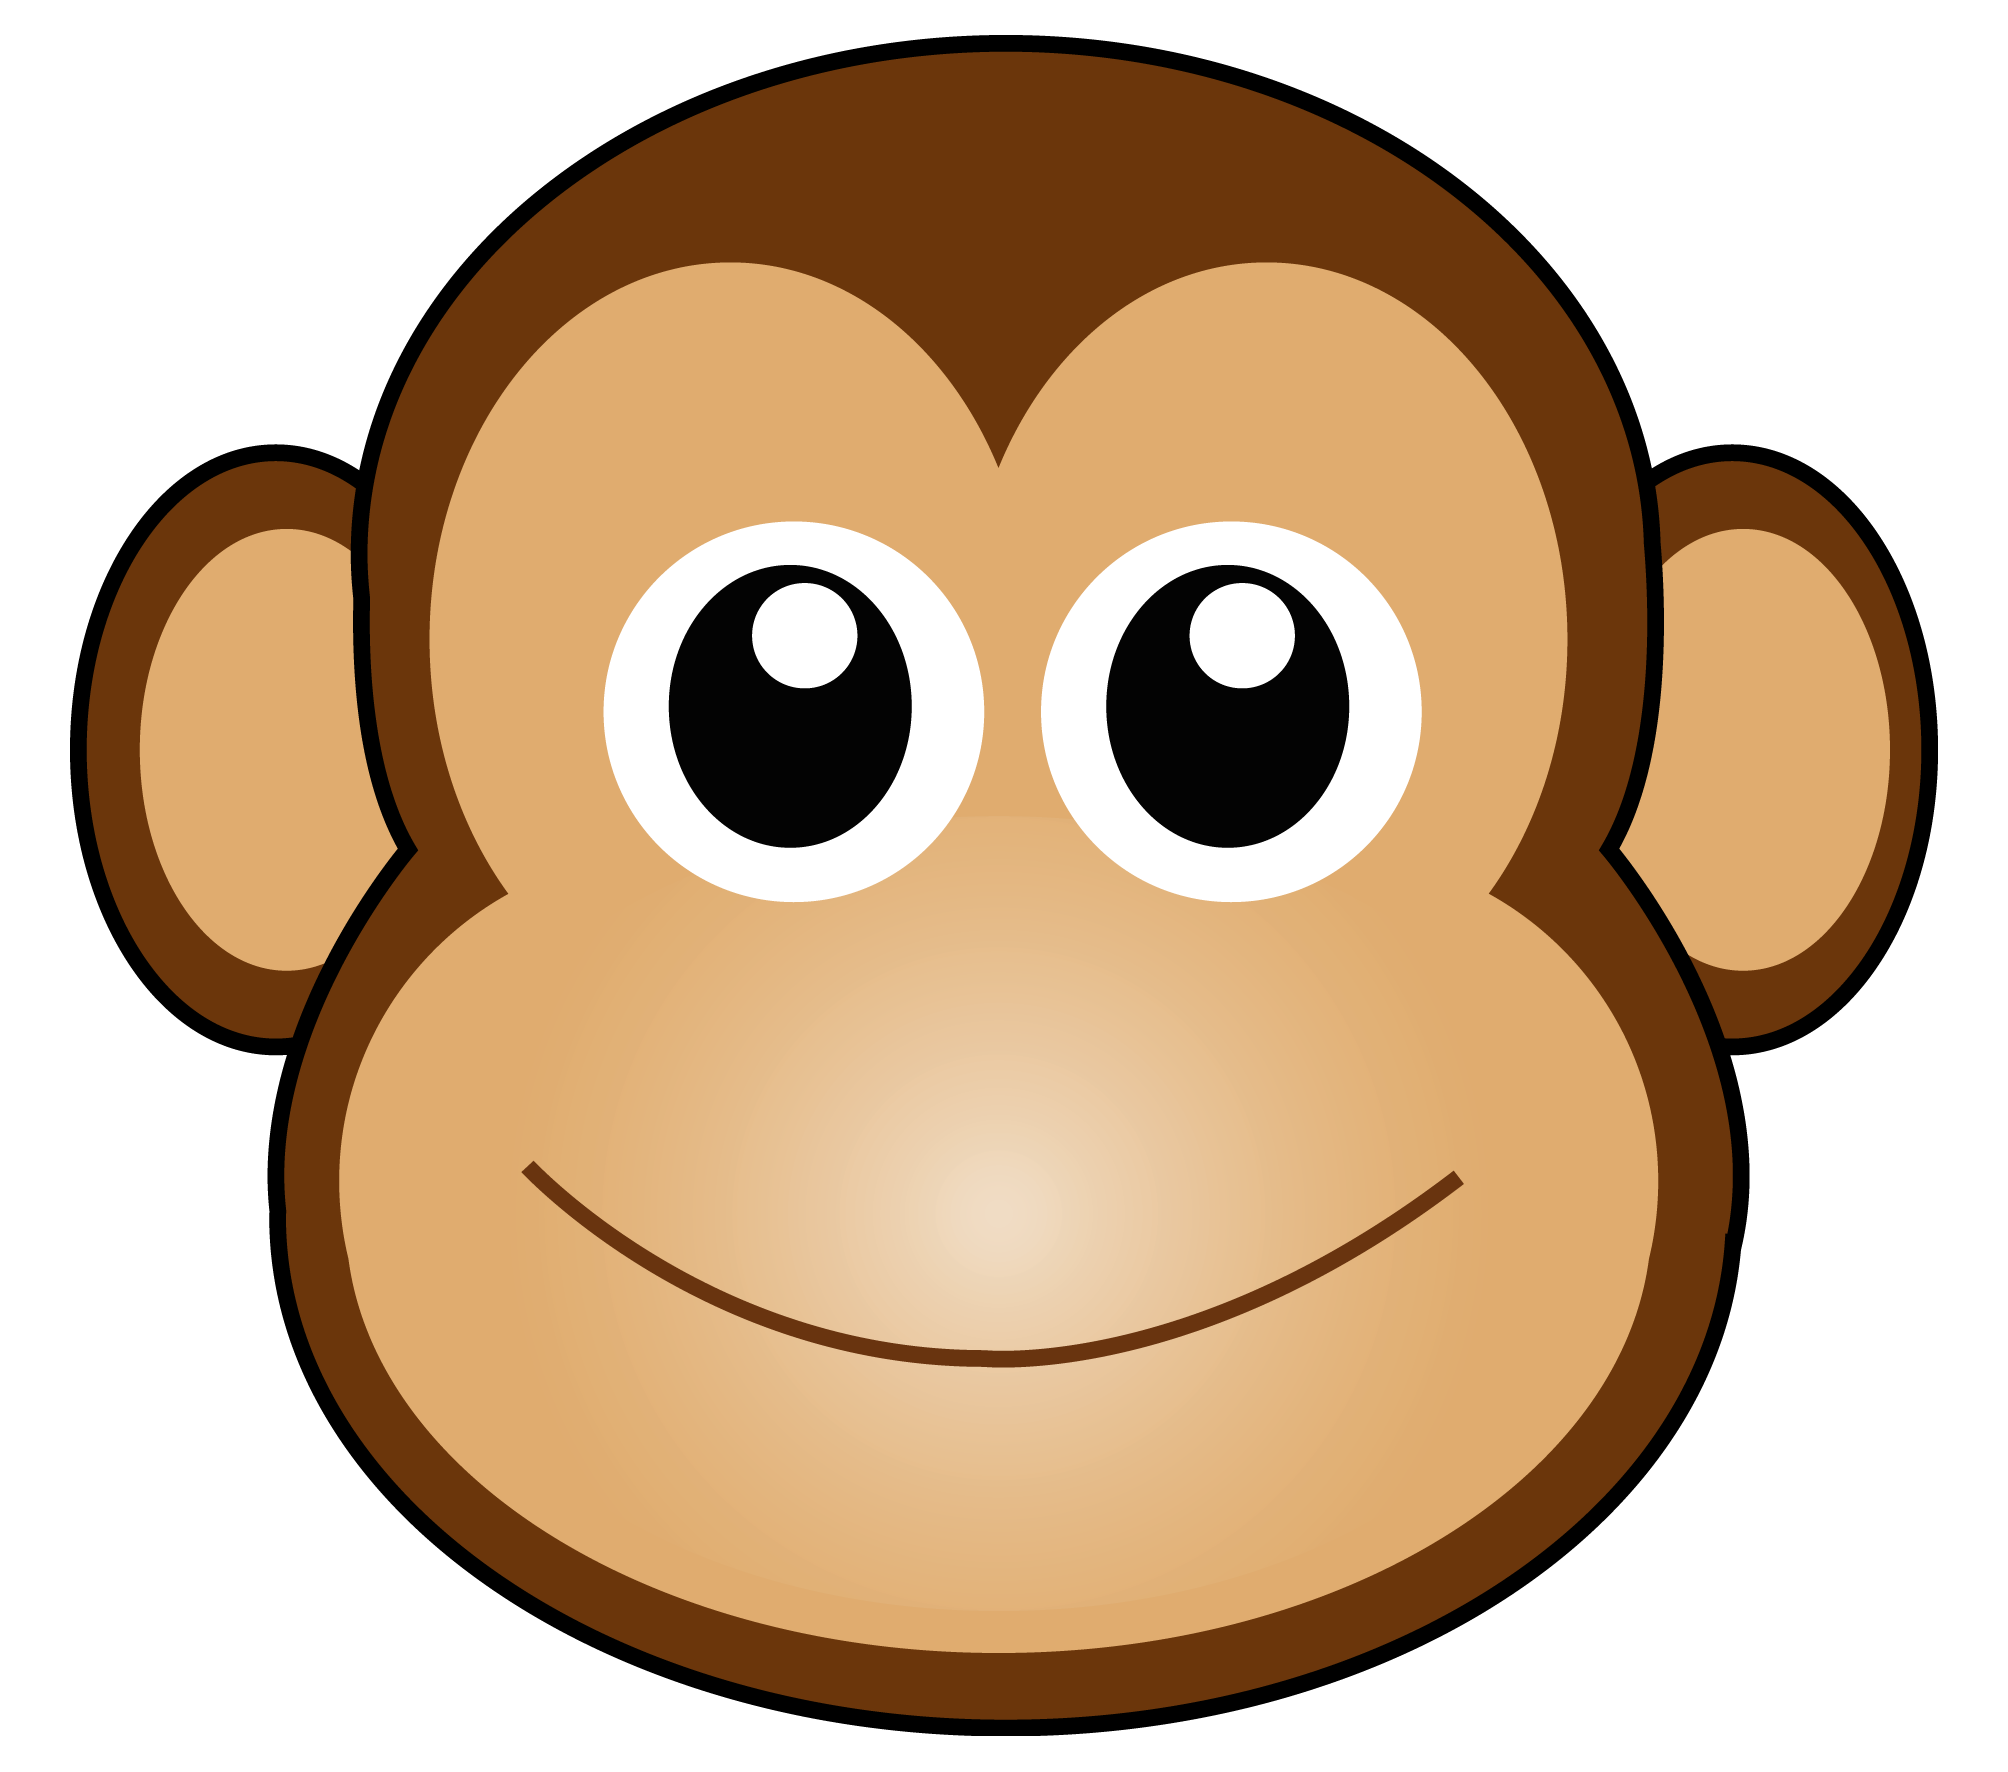  Monyet Free Images at Clker com vector clip art online 